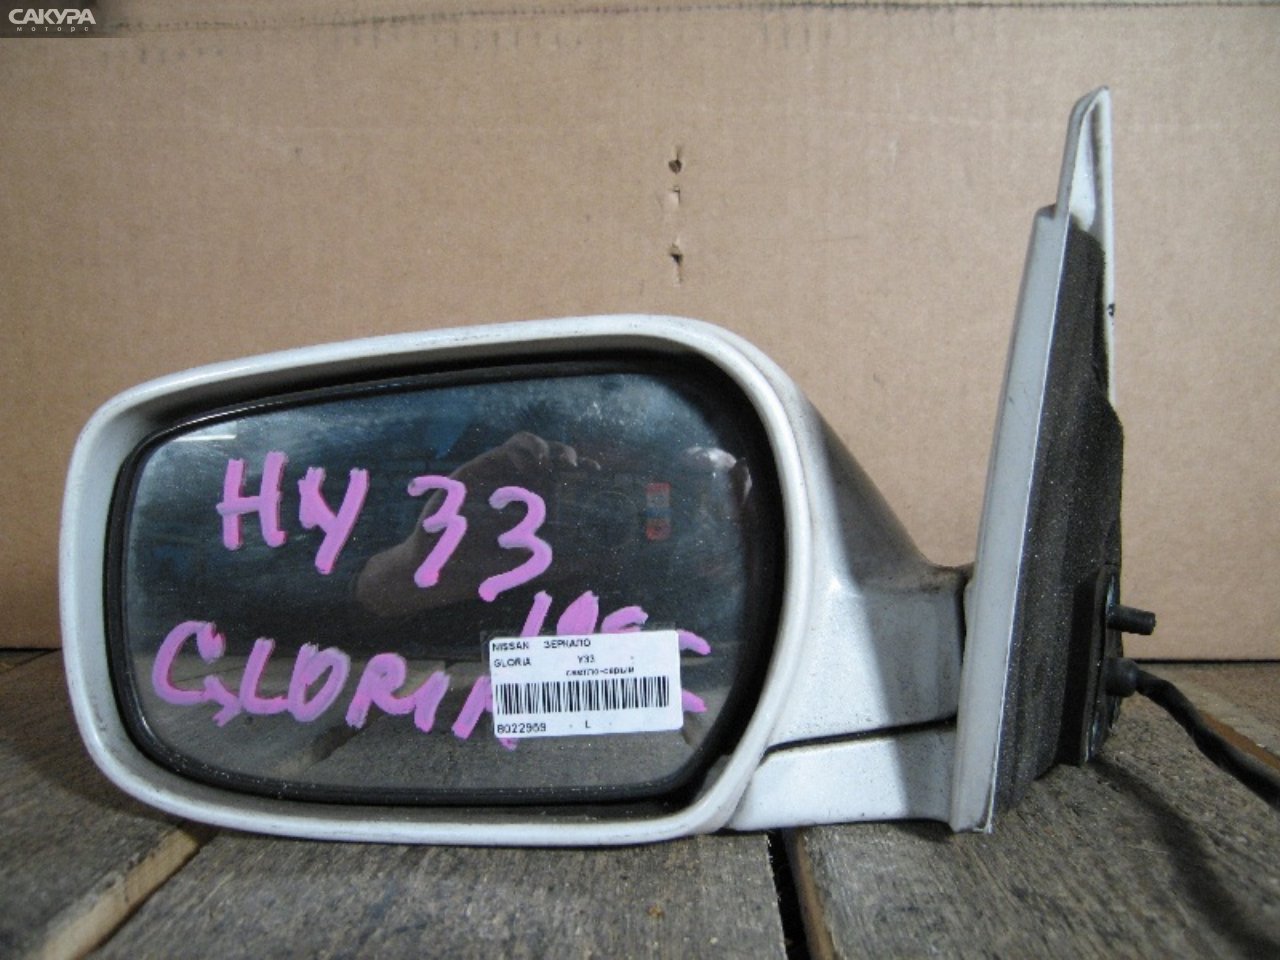 Зеркало боковое левое Nissan Gloria Y33: купить в Сакура Абакан.